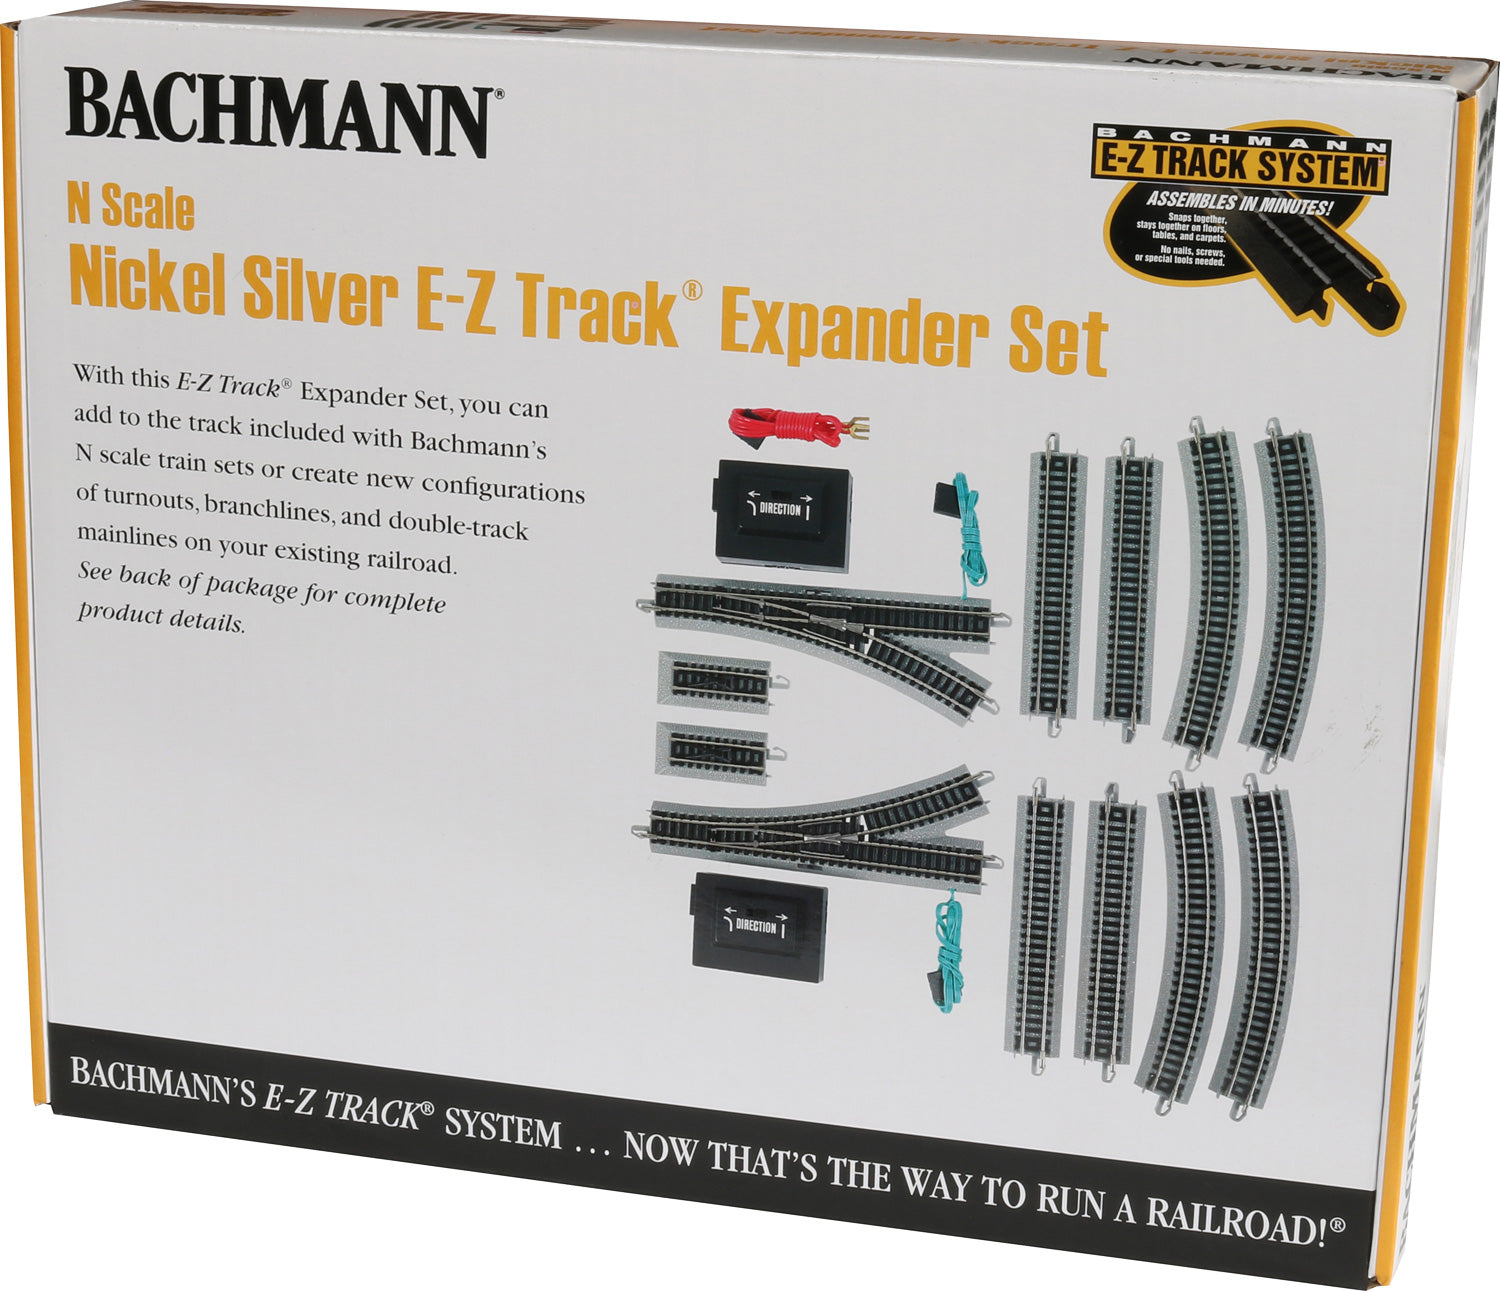 E-Z Track Expander Pack